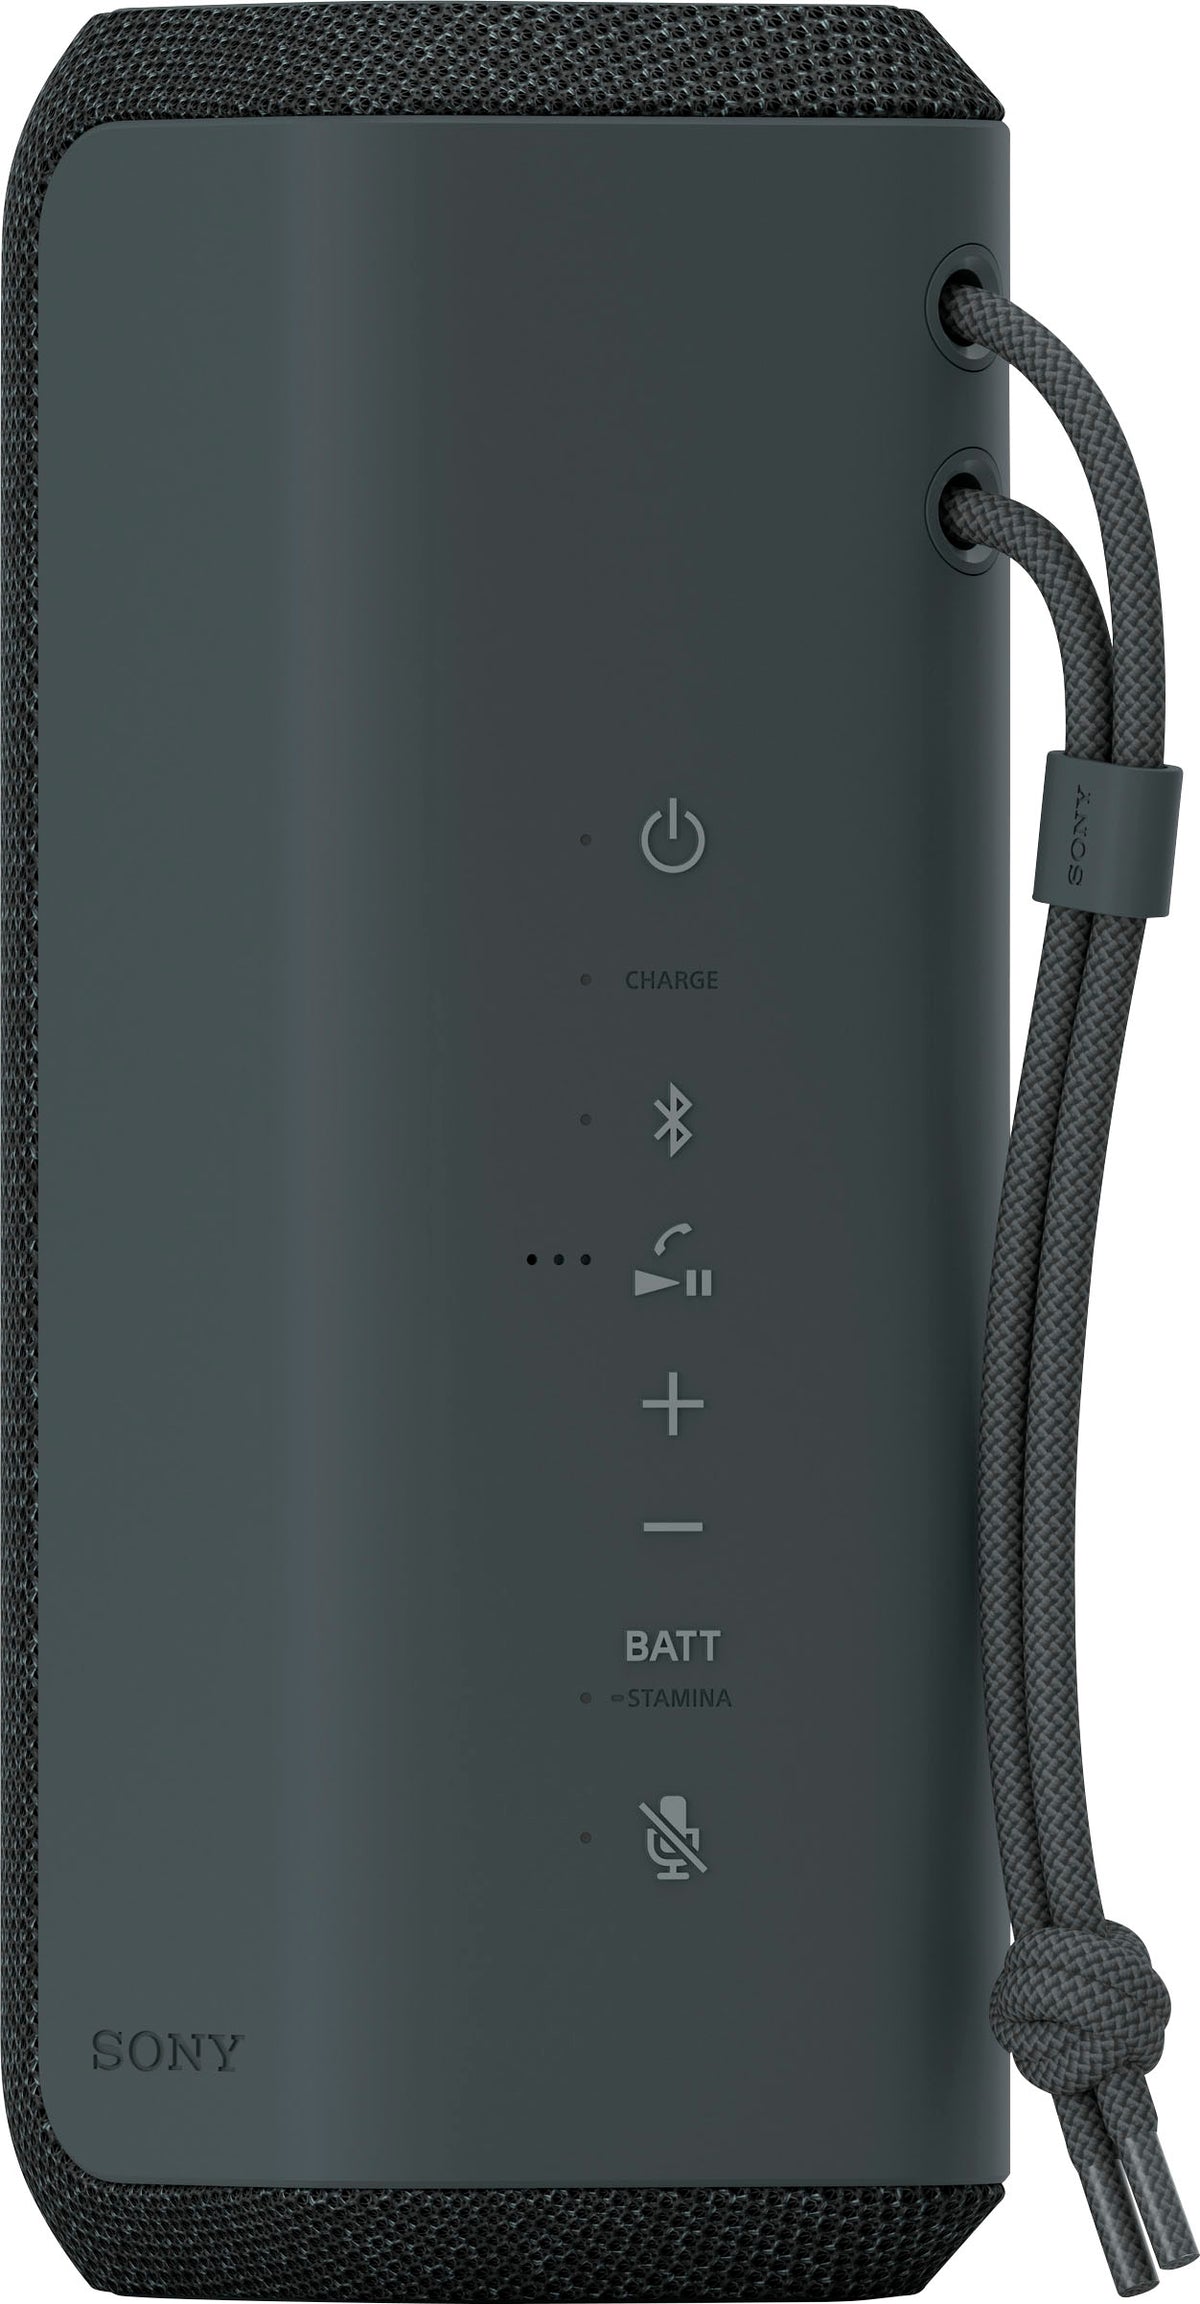 Sony - SRSXE200 Portable X-Series Bluetooth Speaker - Black - Upscaled